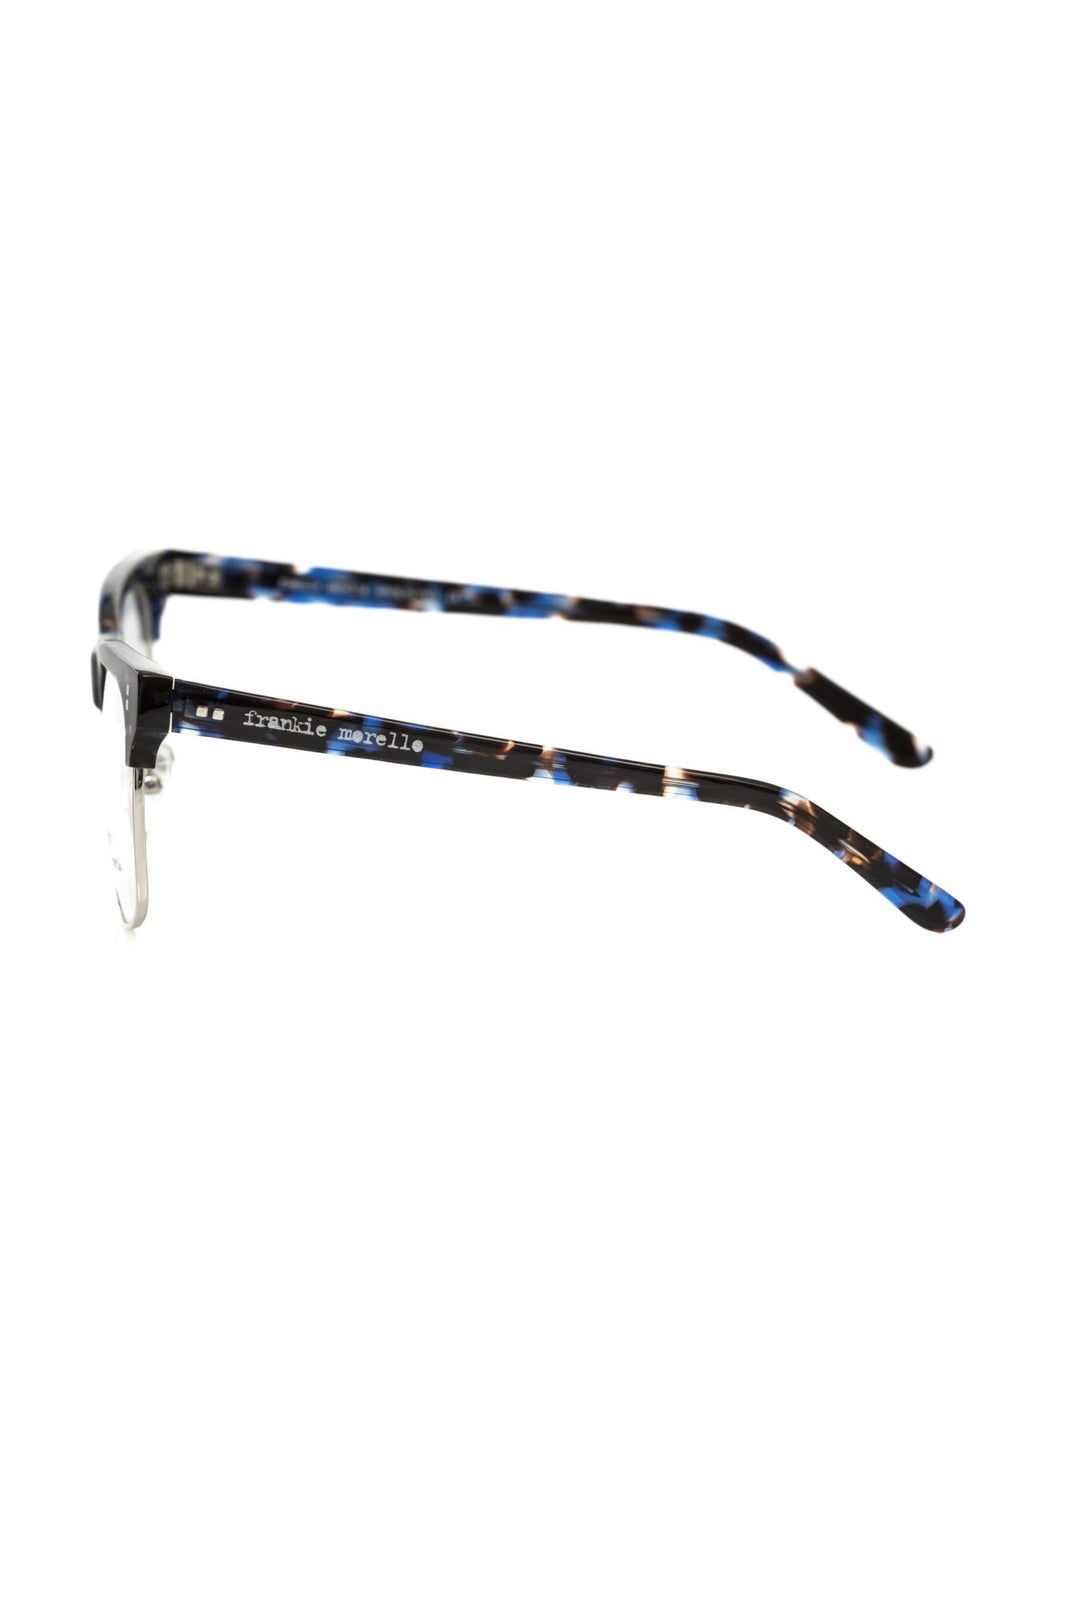 Frankie Morello Elegant Clubmaster Blue Fantasy Eyeglasses